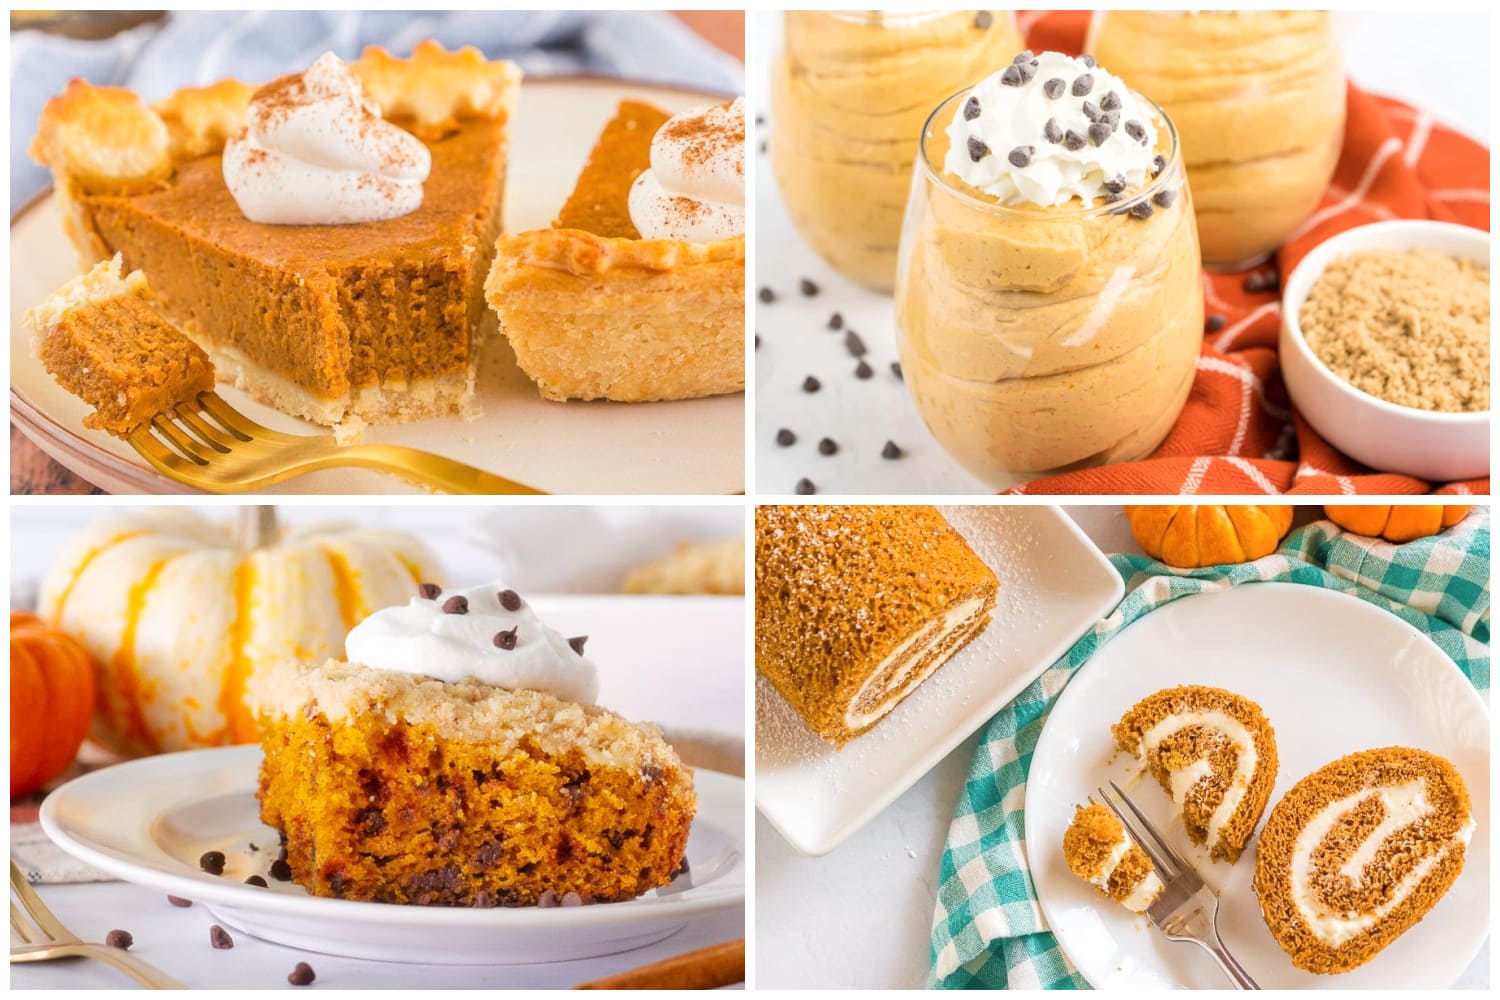 Collage of Pumpkin desserts including pumpkin pie, pumpkin mousse, pumpkin cake, and a pumpkin roll.